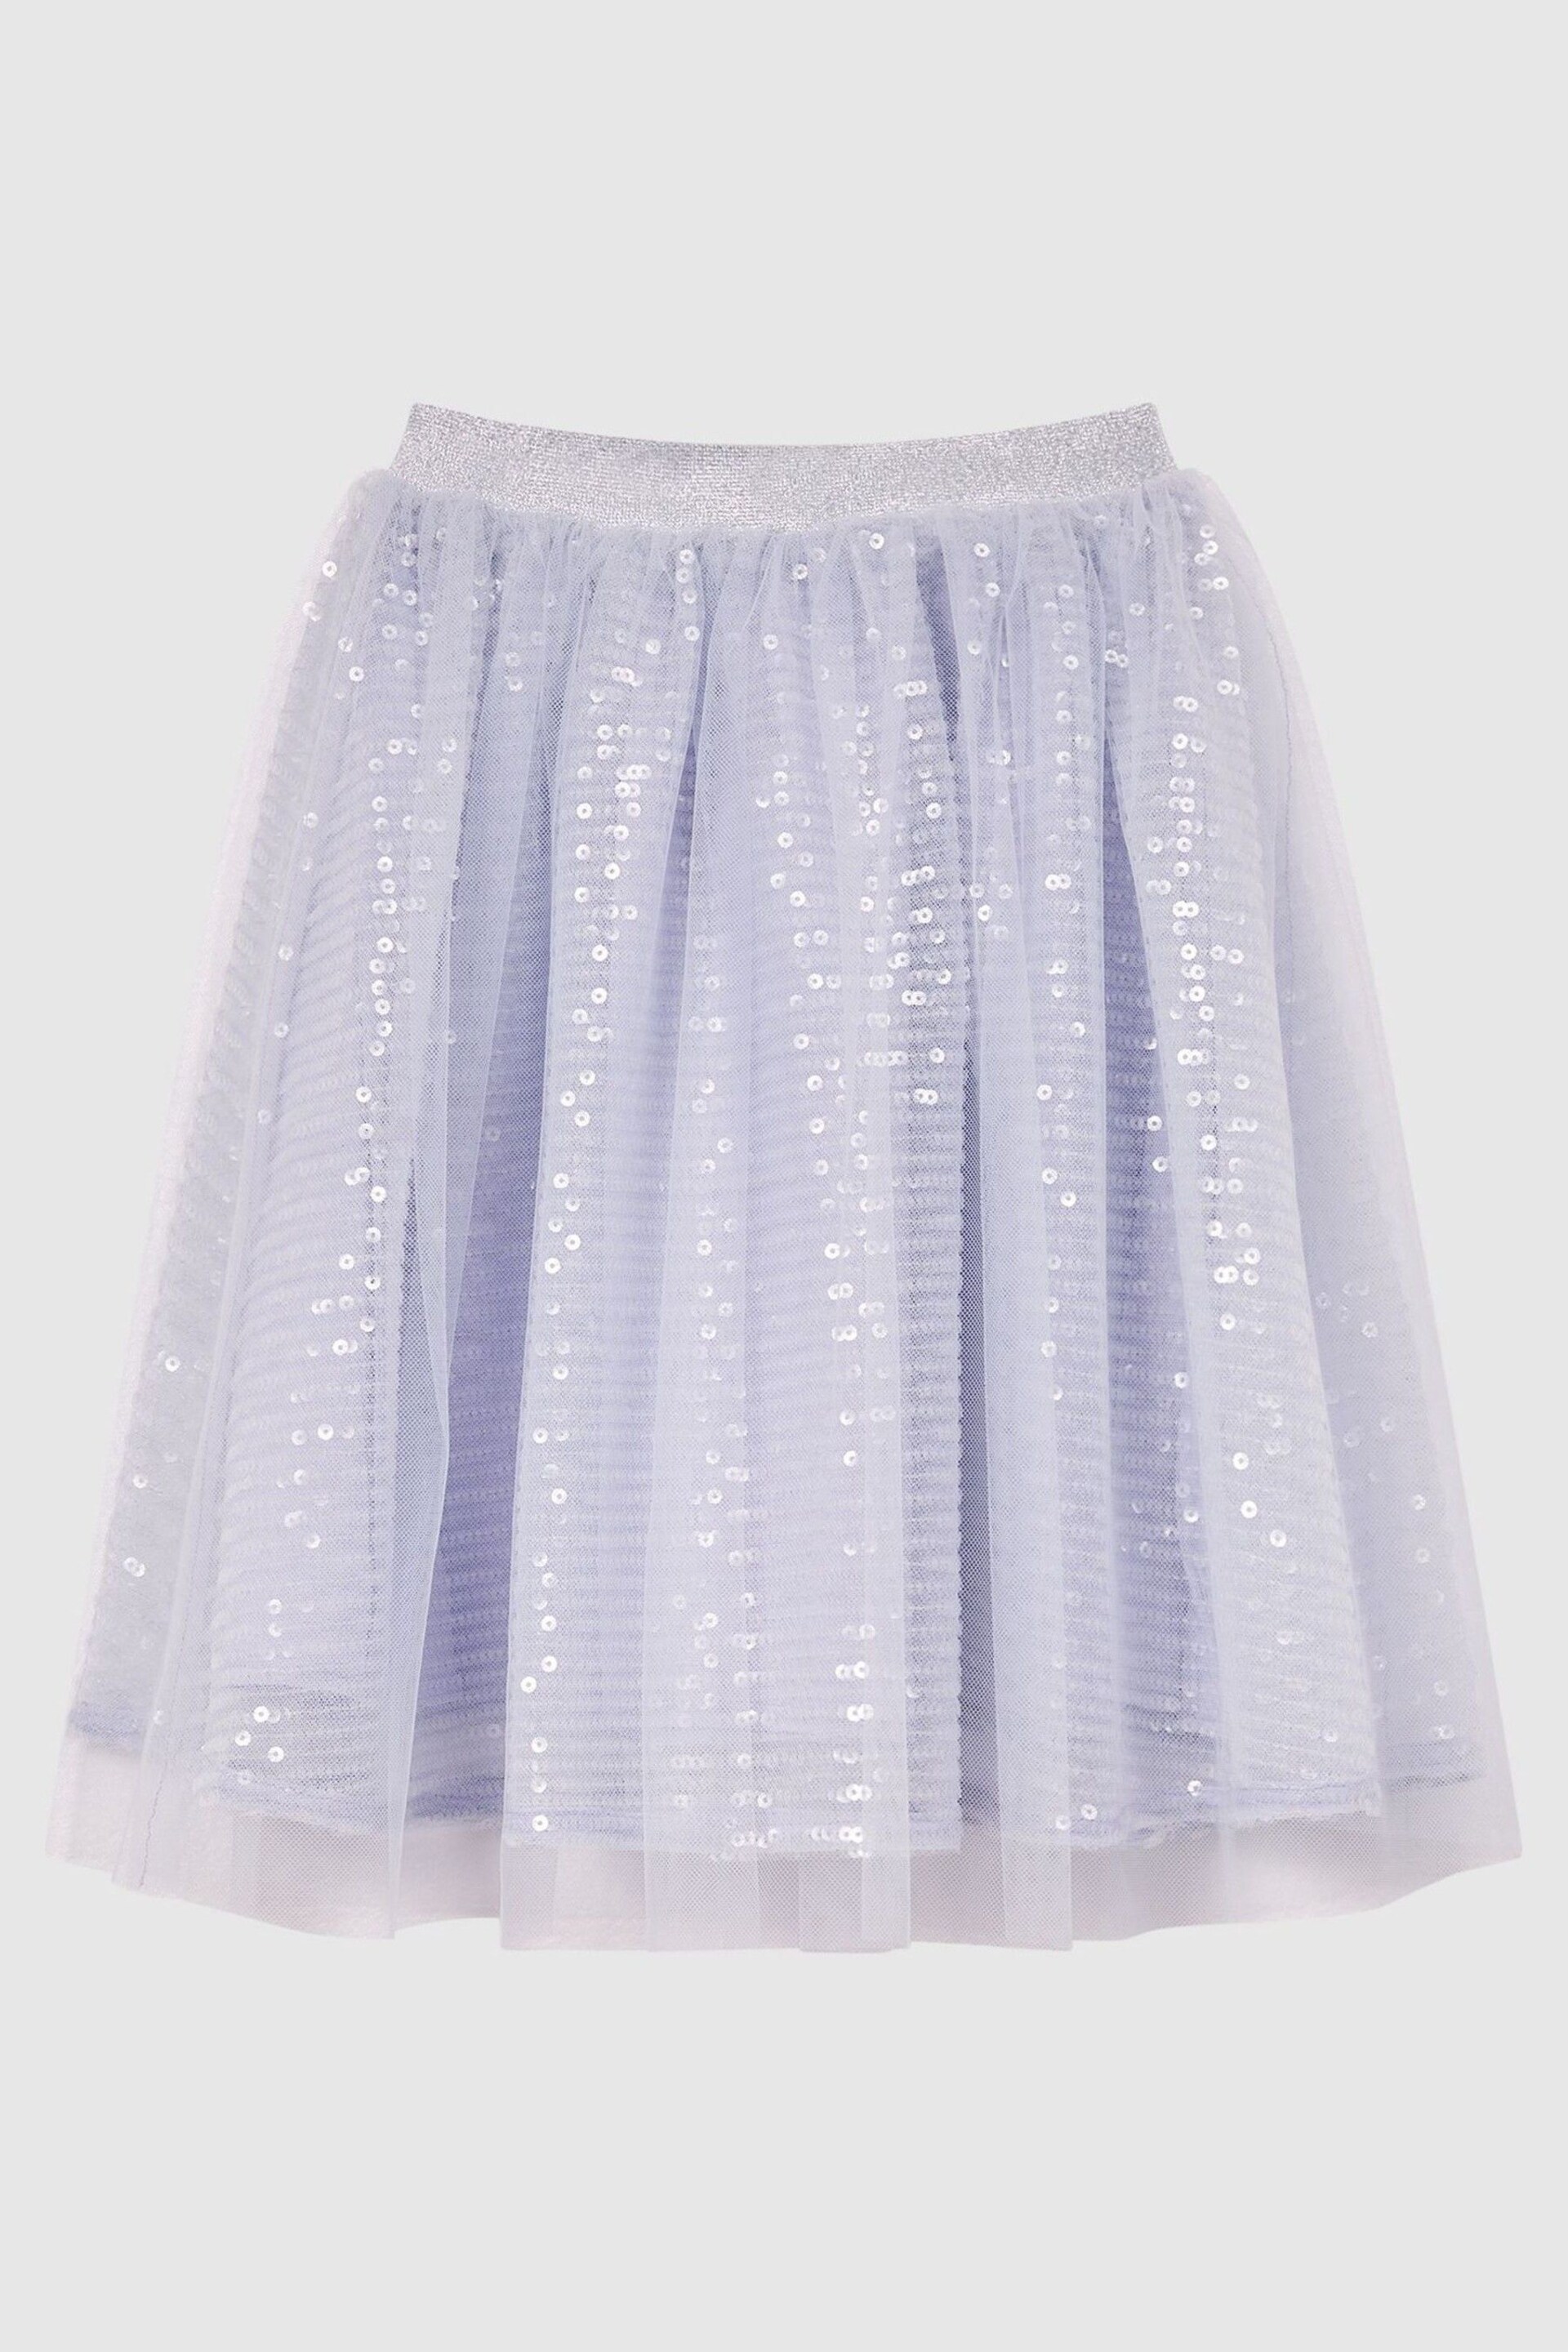 Reiss Lilac Charlotta Junior Sequin Midi Skirt - Image 2 of 6